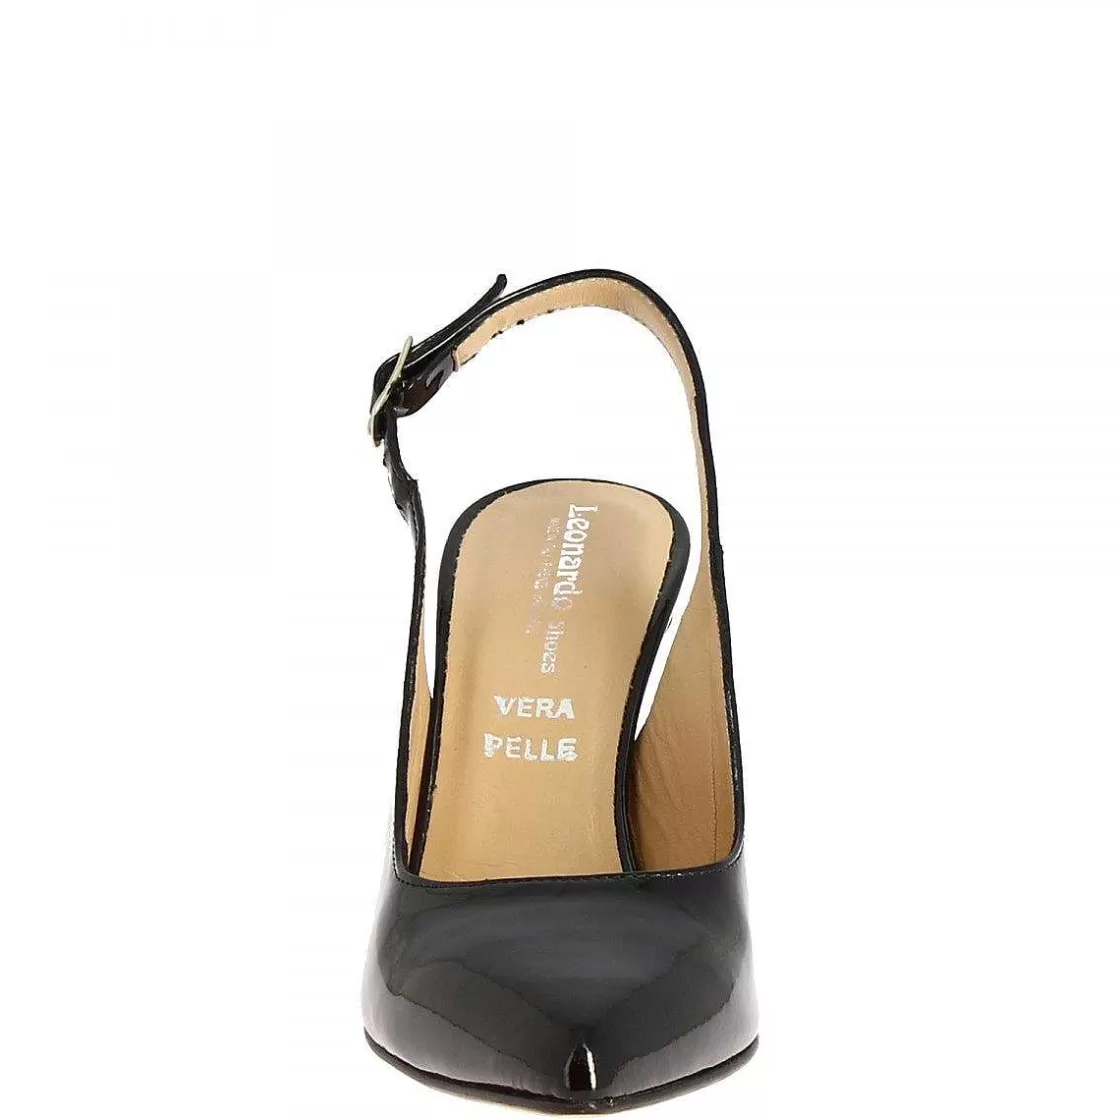 Leonardo Women'S Handmade High Heels Slingback Pumps In Black Patent Leather Outlet